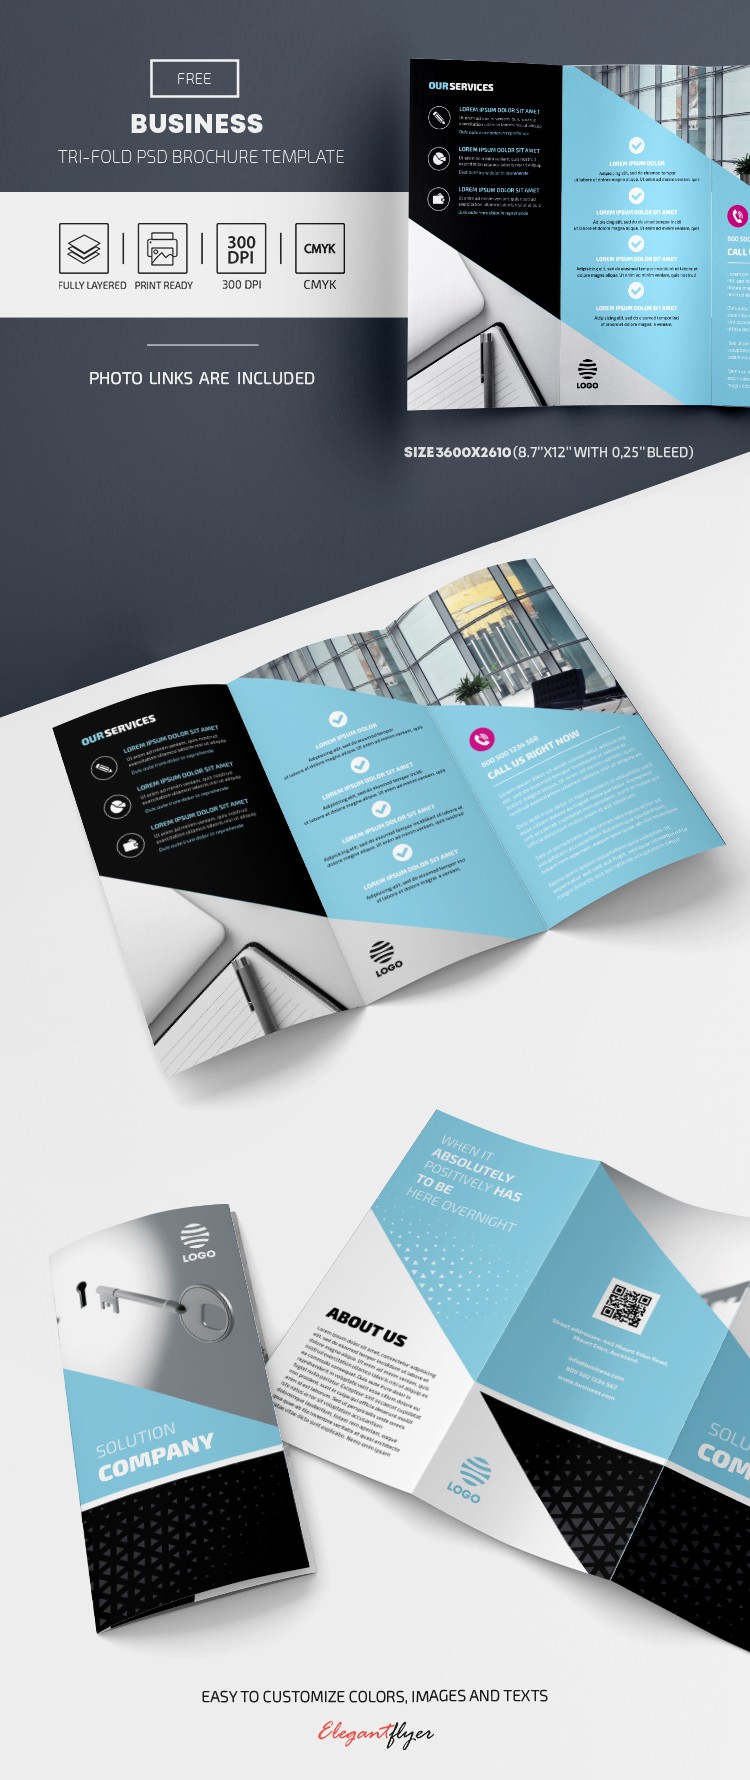 Business Tri-fold Brochure by ElegantFlyer